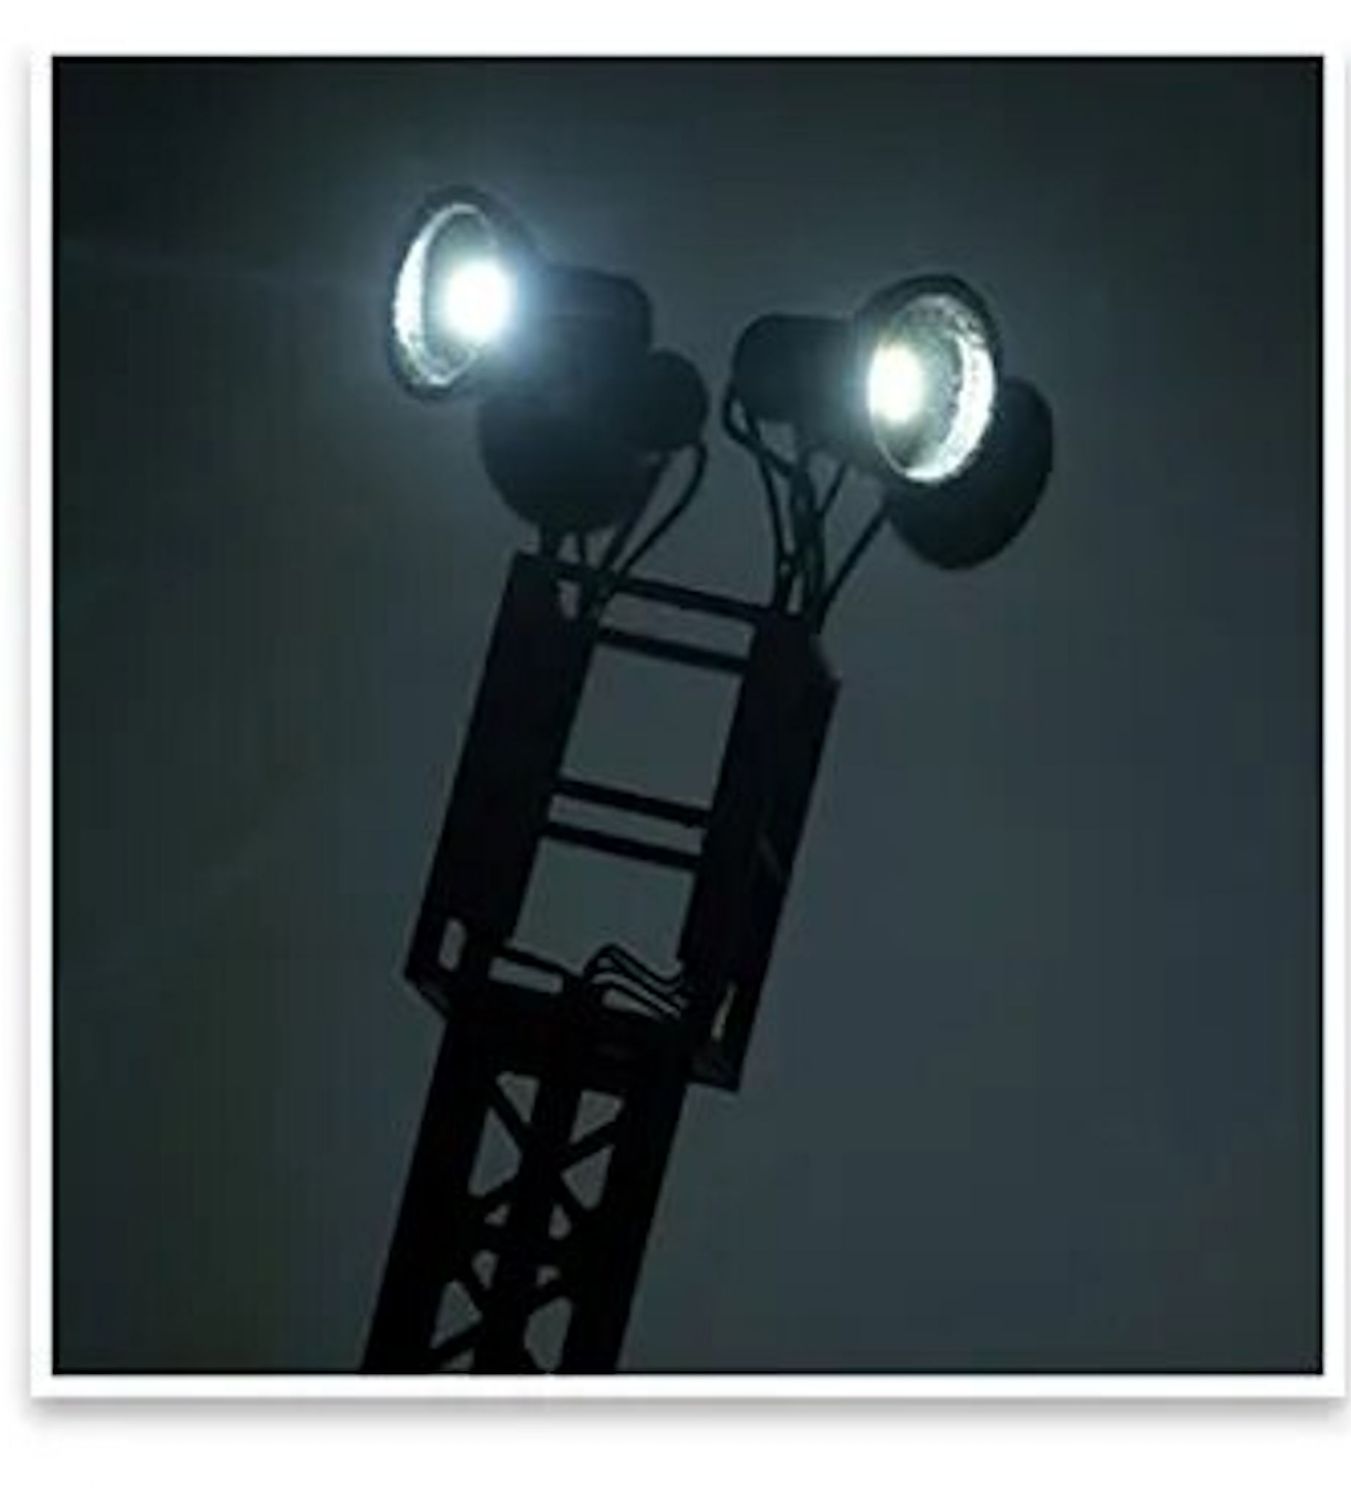 Tower Mast Light with 4 working spotlights